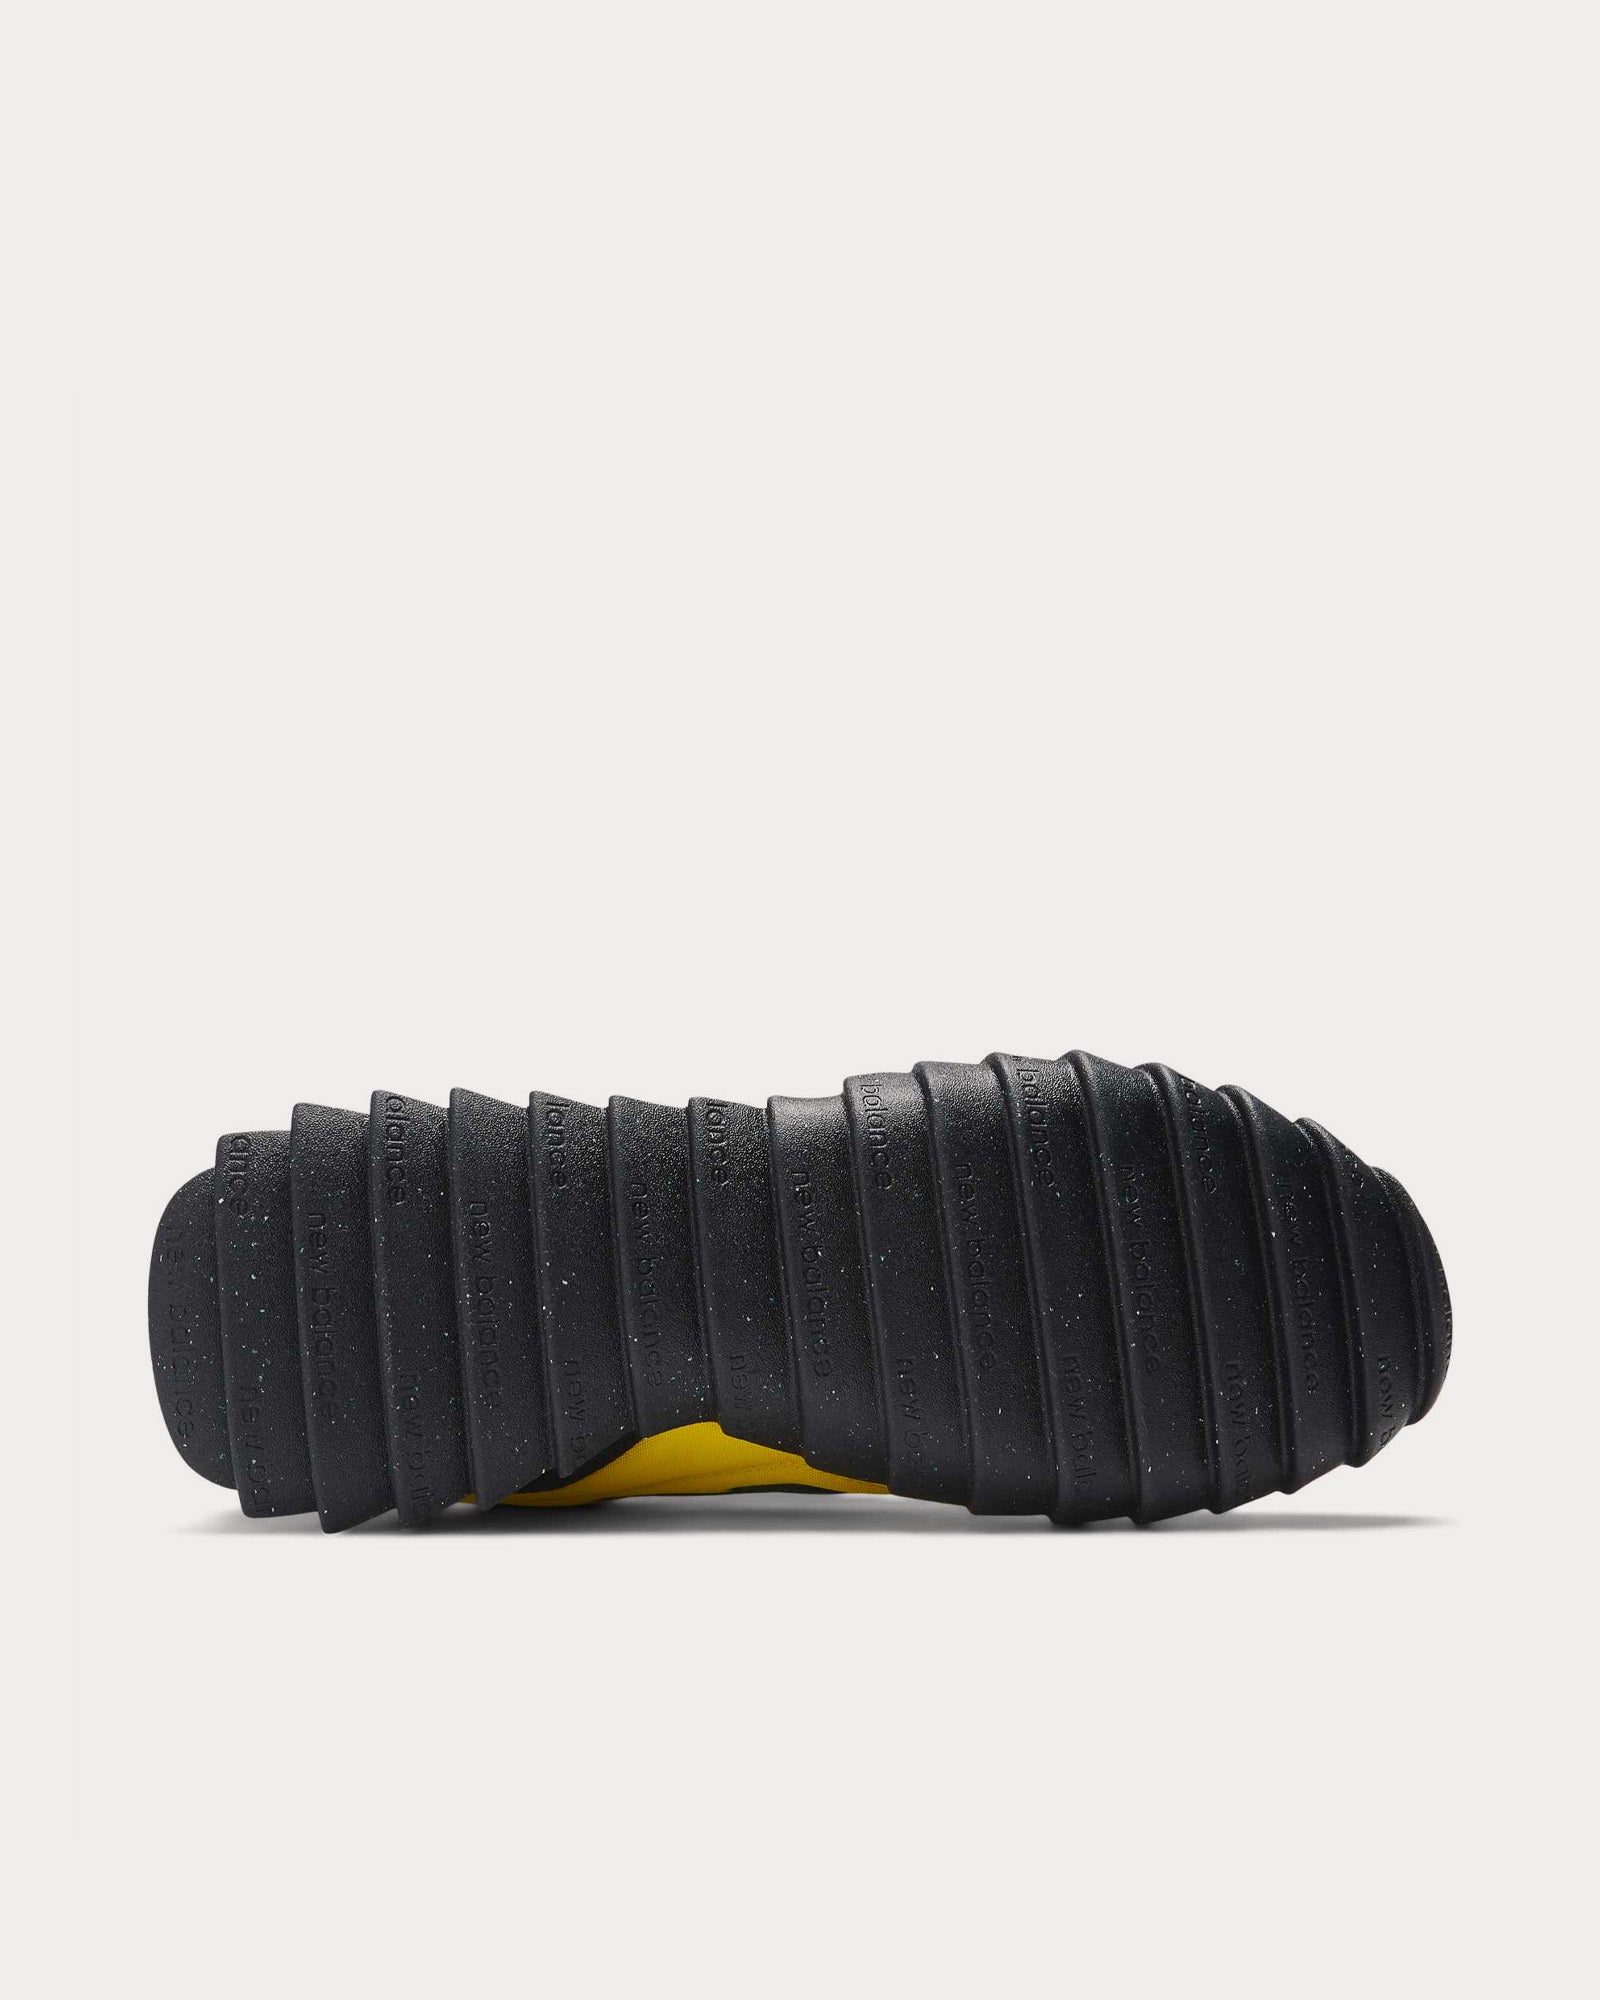 New Balance x Ganni - RC30 Black / Blazing Yellow Low Top Sneakers